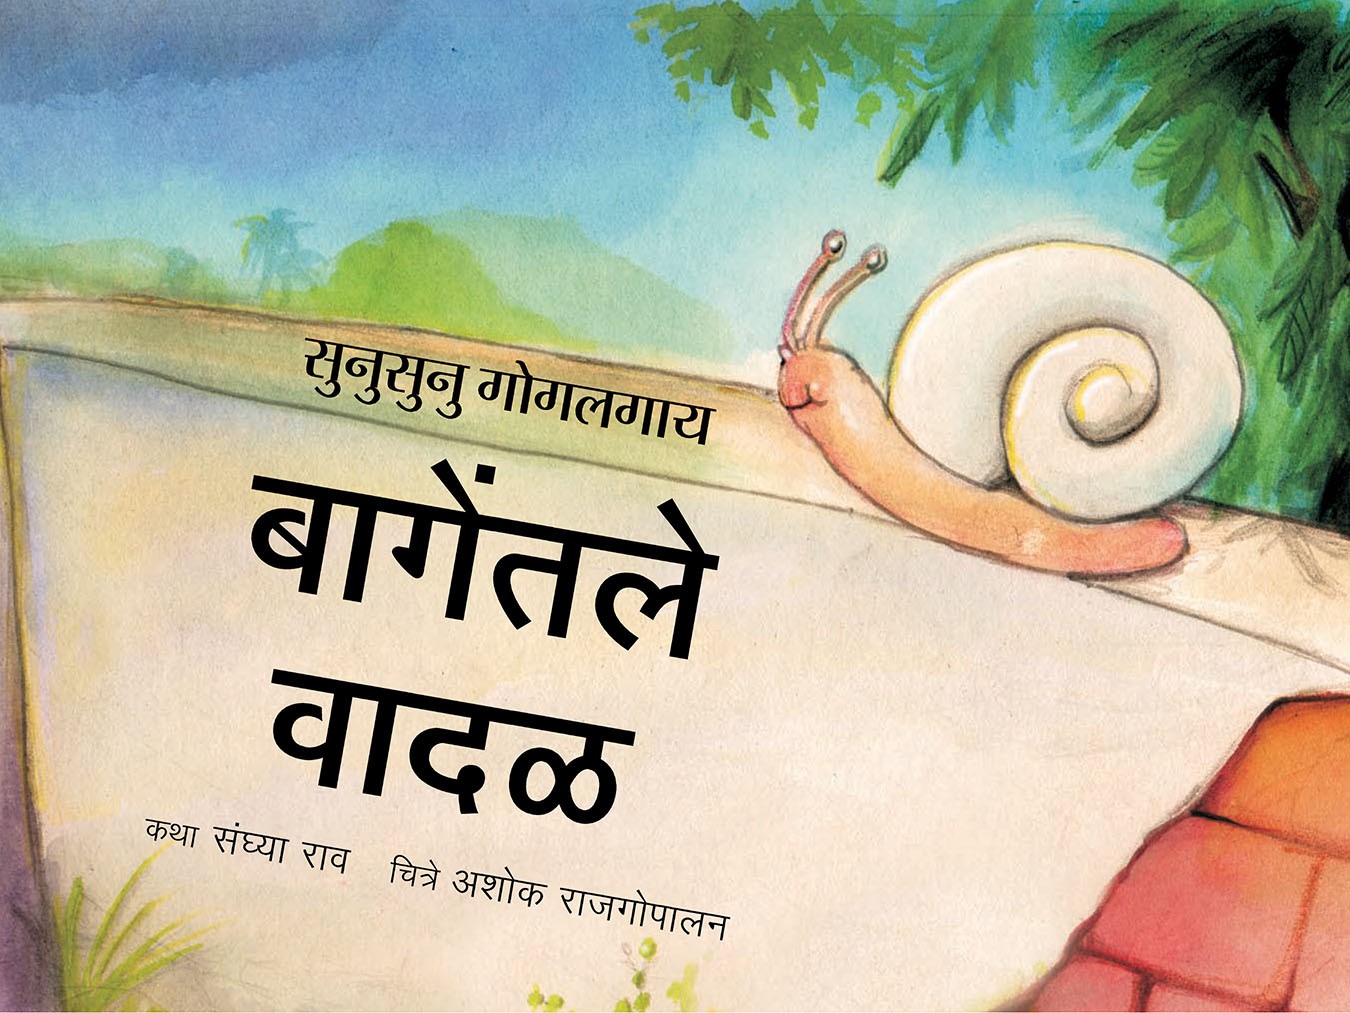 Sunu-sunu Snail: Storm in the Garden/Sunusunu Gogalgaay: Baagentale Vaadal (Marathi)